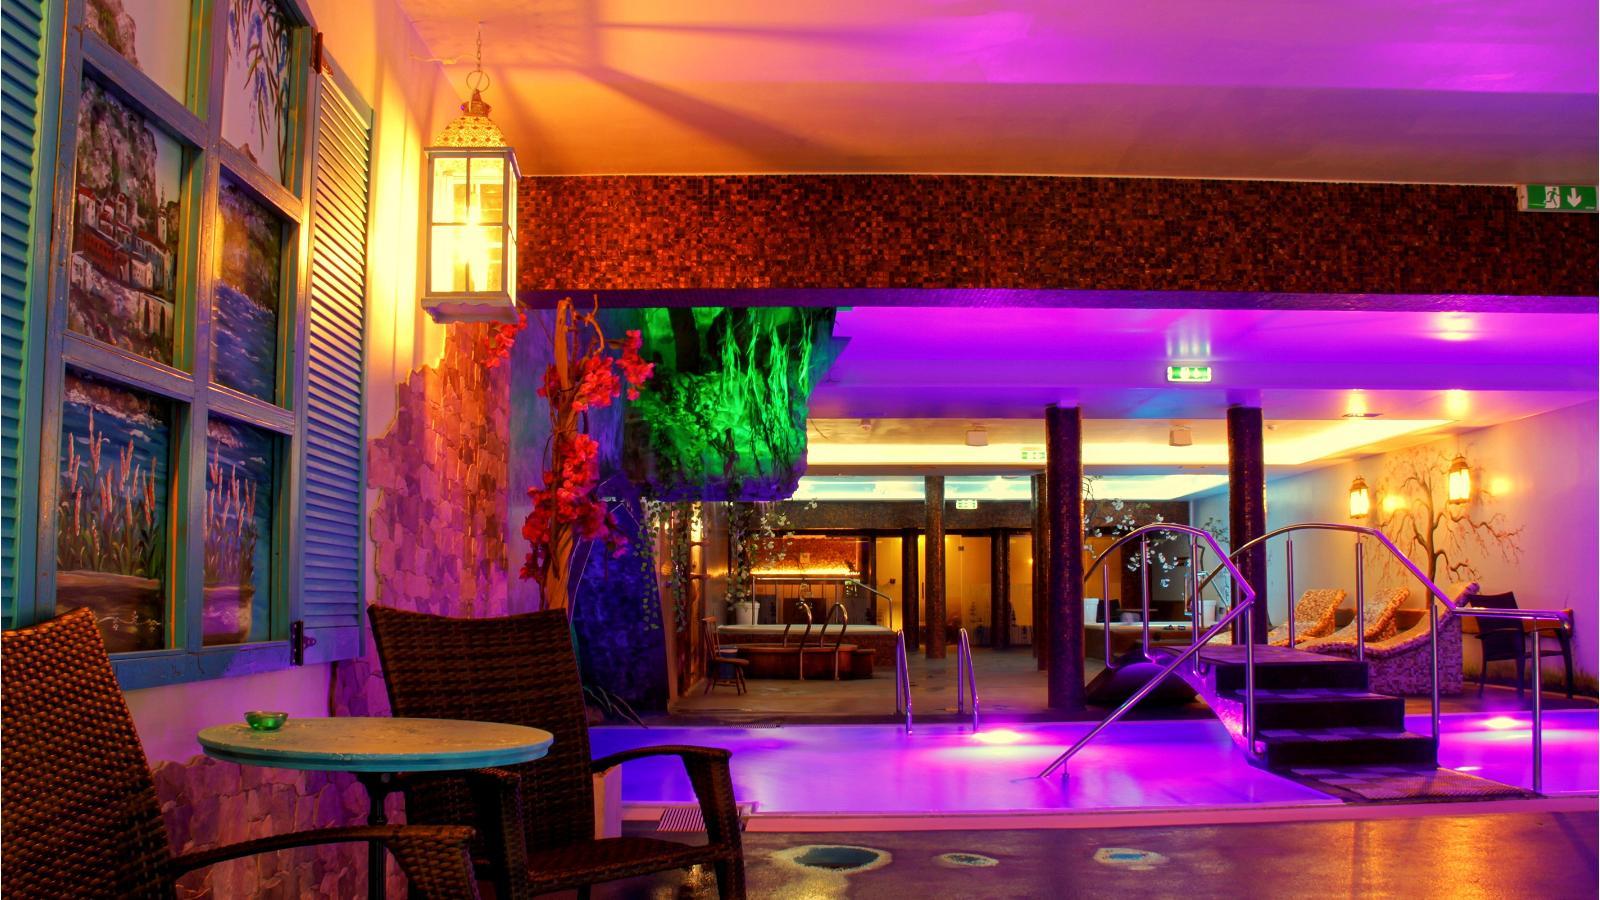 Lavendel Spa Sauna and Relaxation Centre | Harjumaa Turism | Visitharju